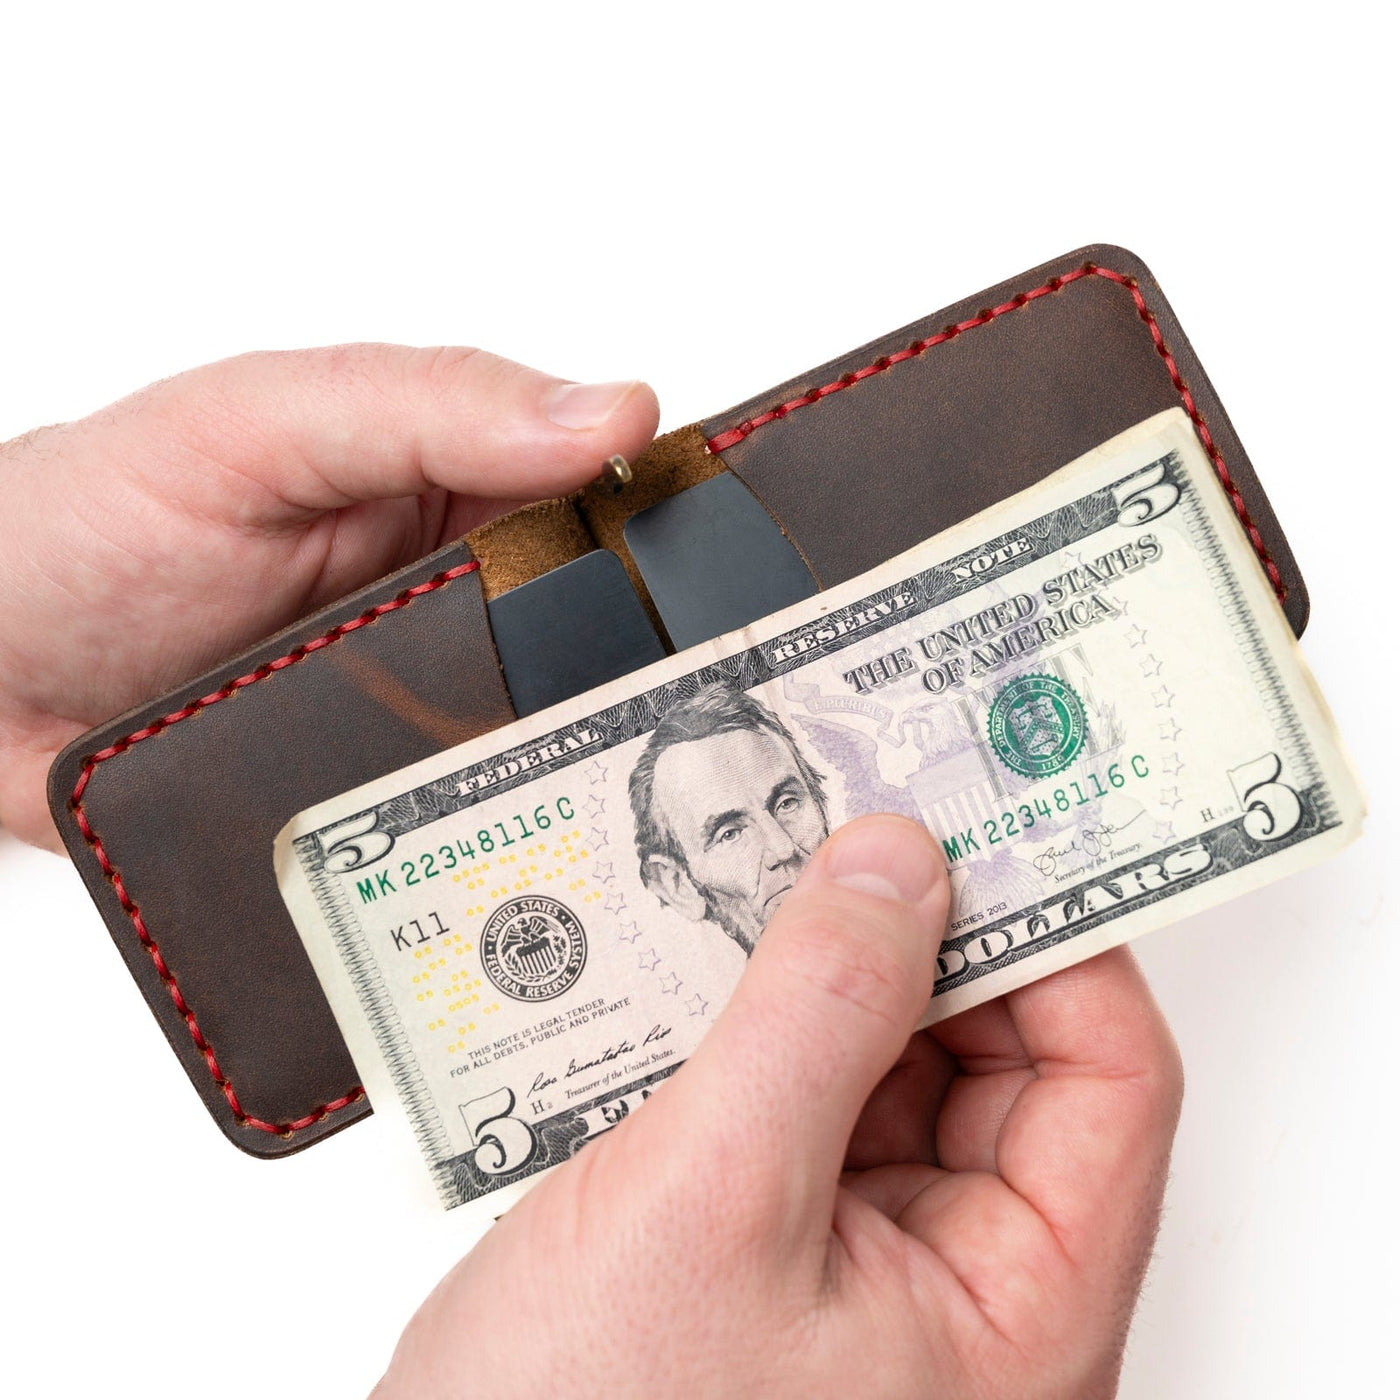 Heritage Brown Money Clip Wallet: For Your Modern Essentials